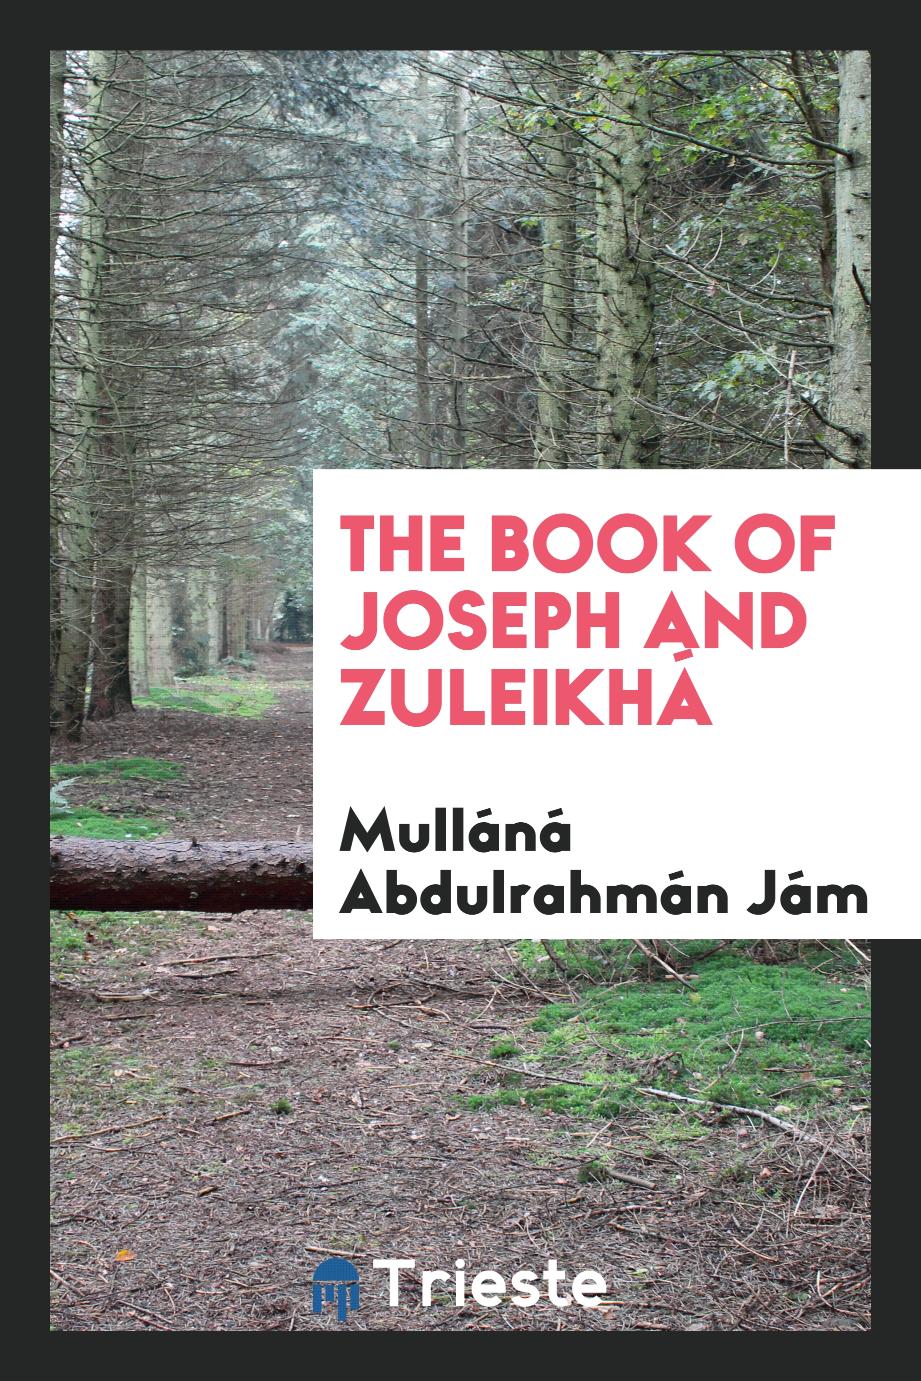 The book of Joseph and Zuleikhá